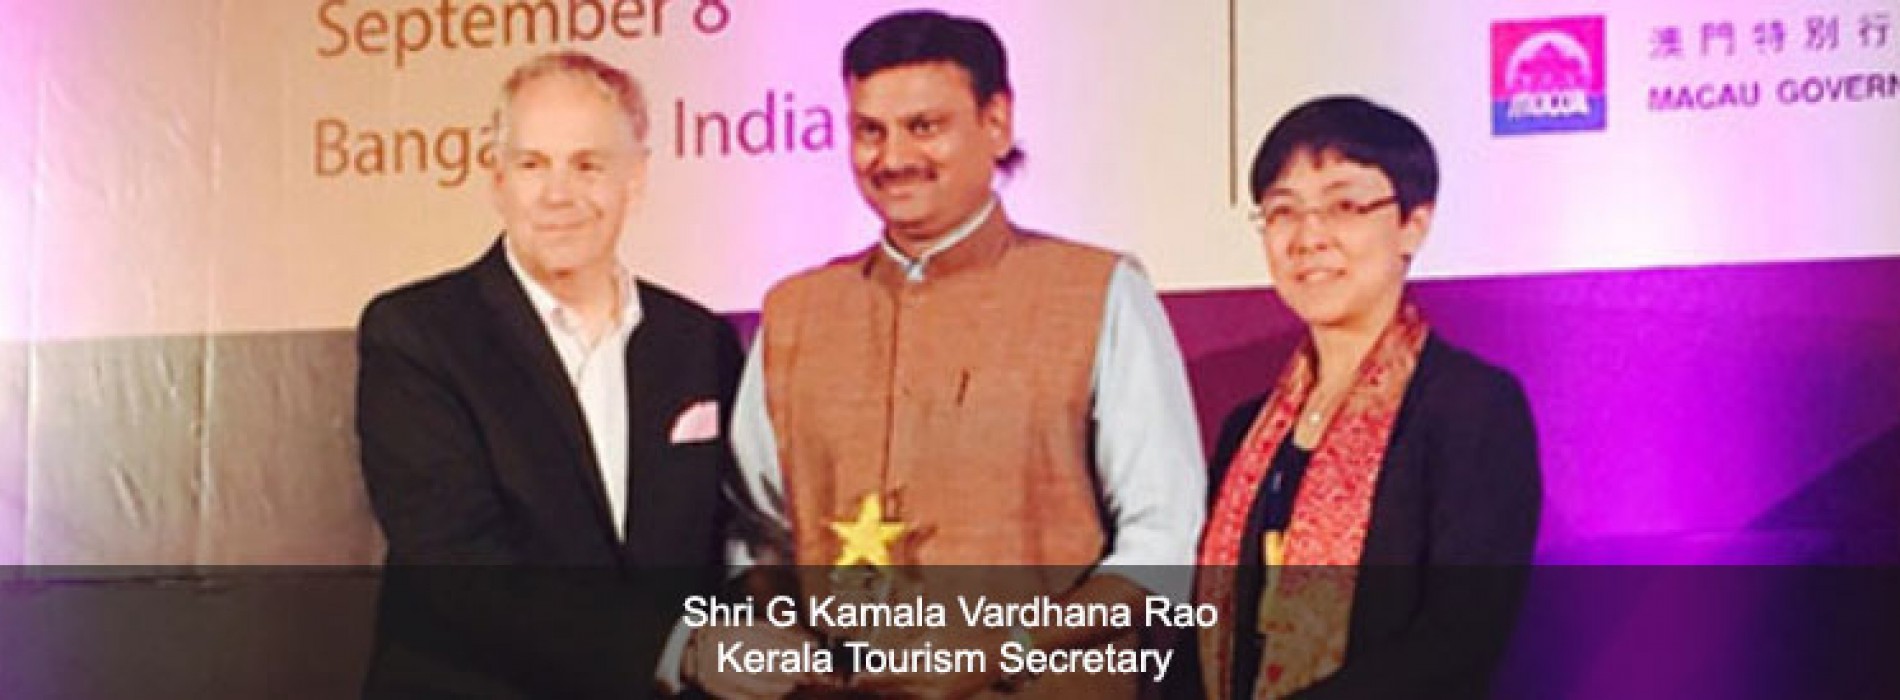 Muziris wins PATA Gold Honour for Kerala Tourism